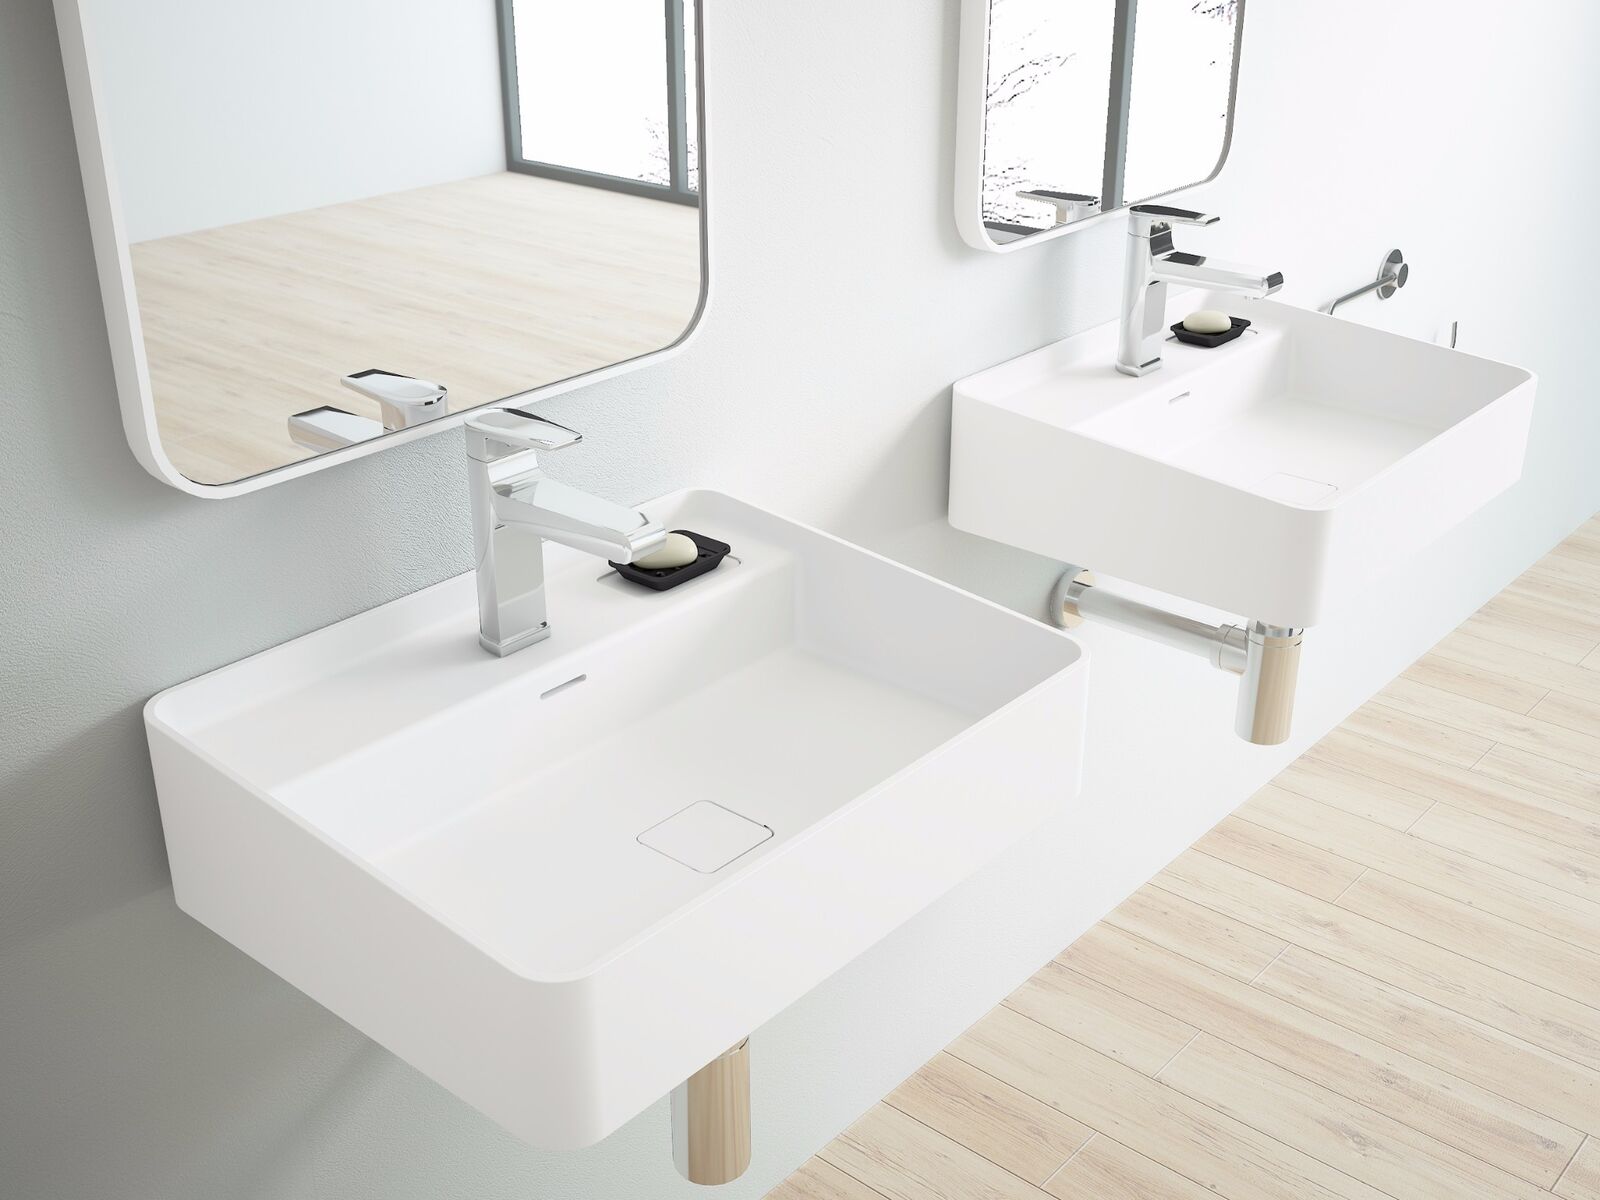 Bathroom sink design 20